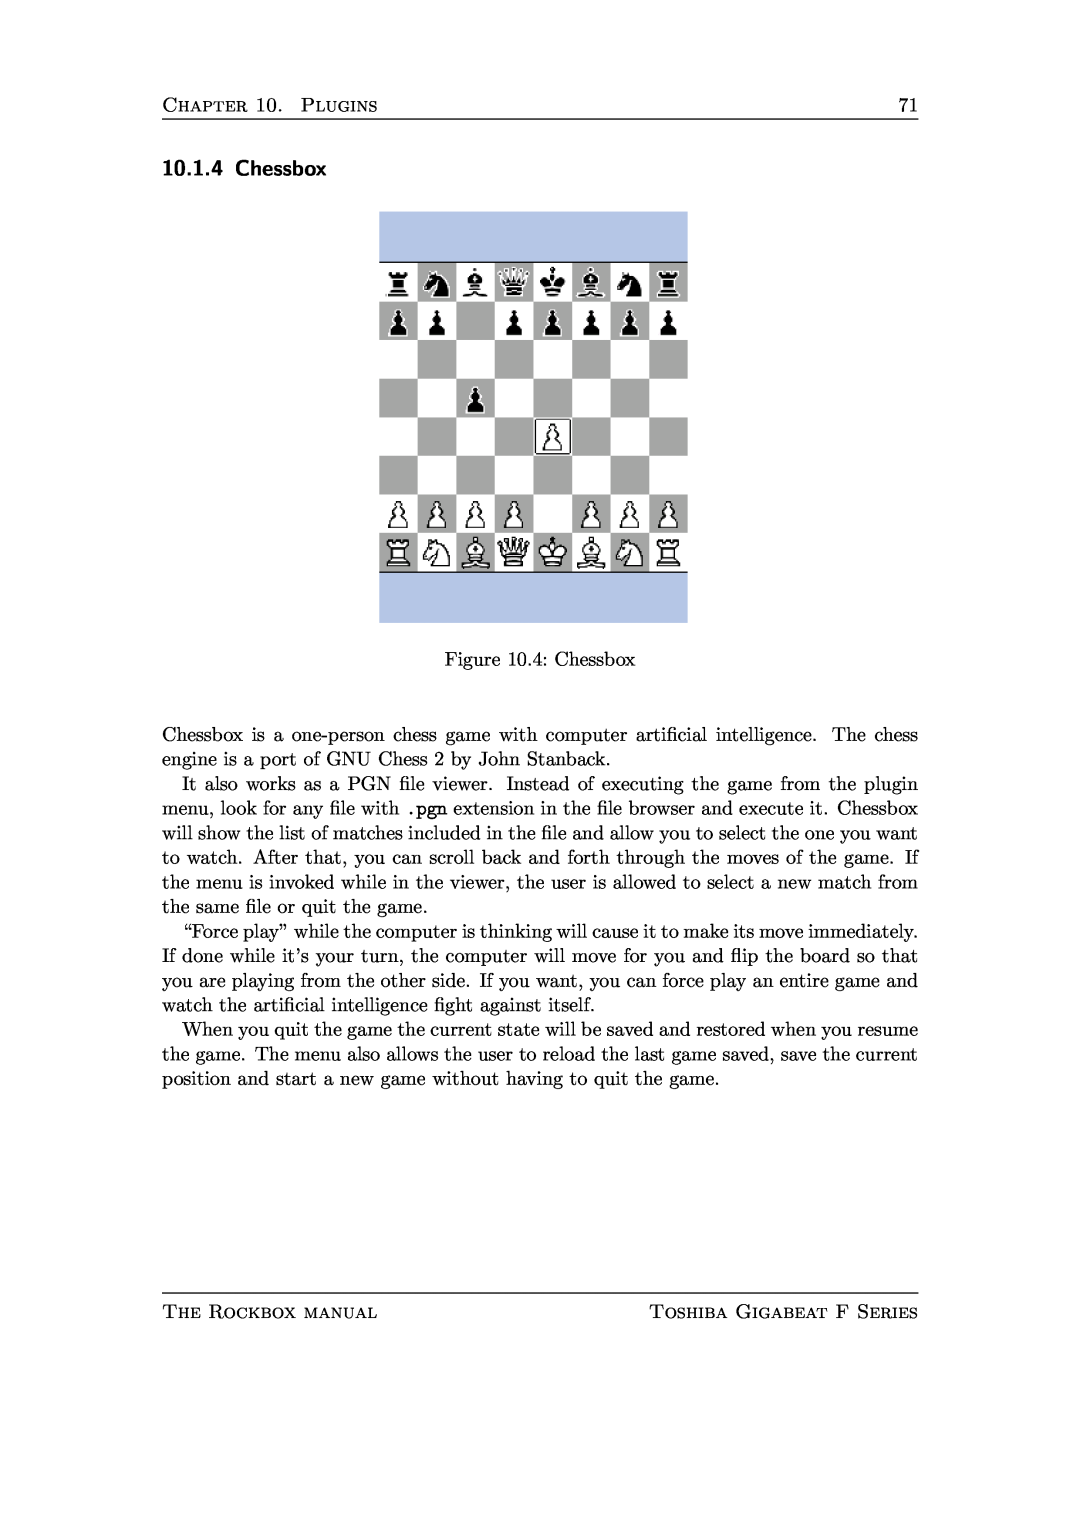 Toshiba F Series manual Chessbox 